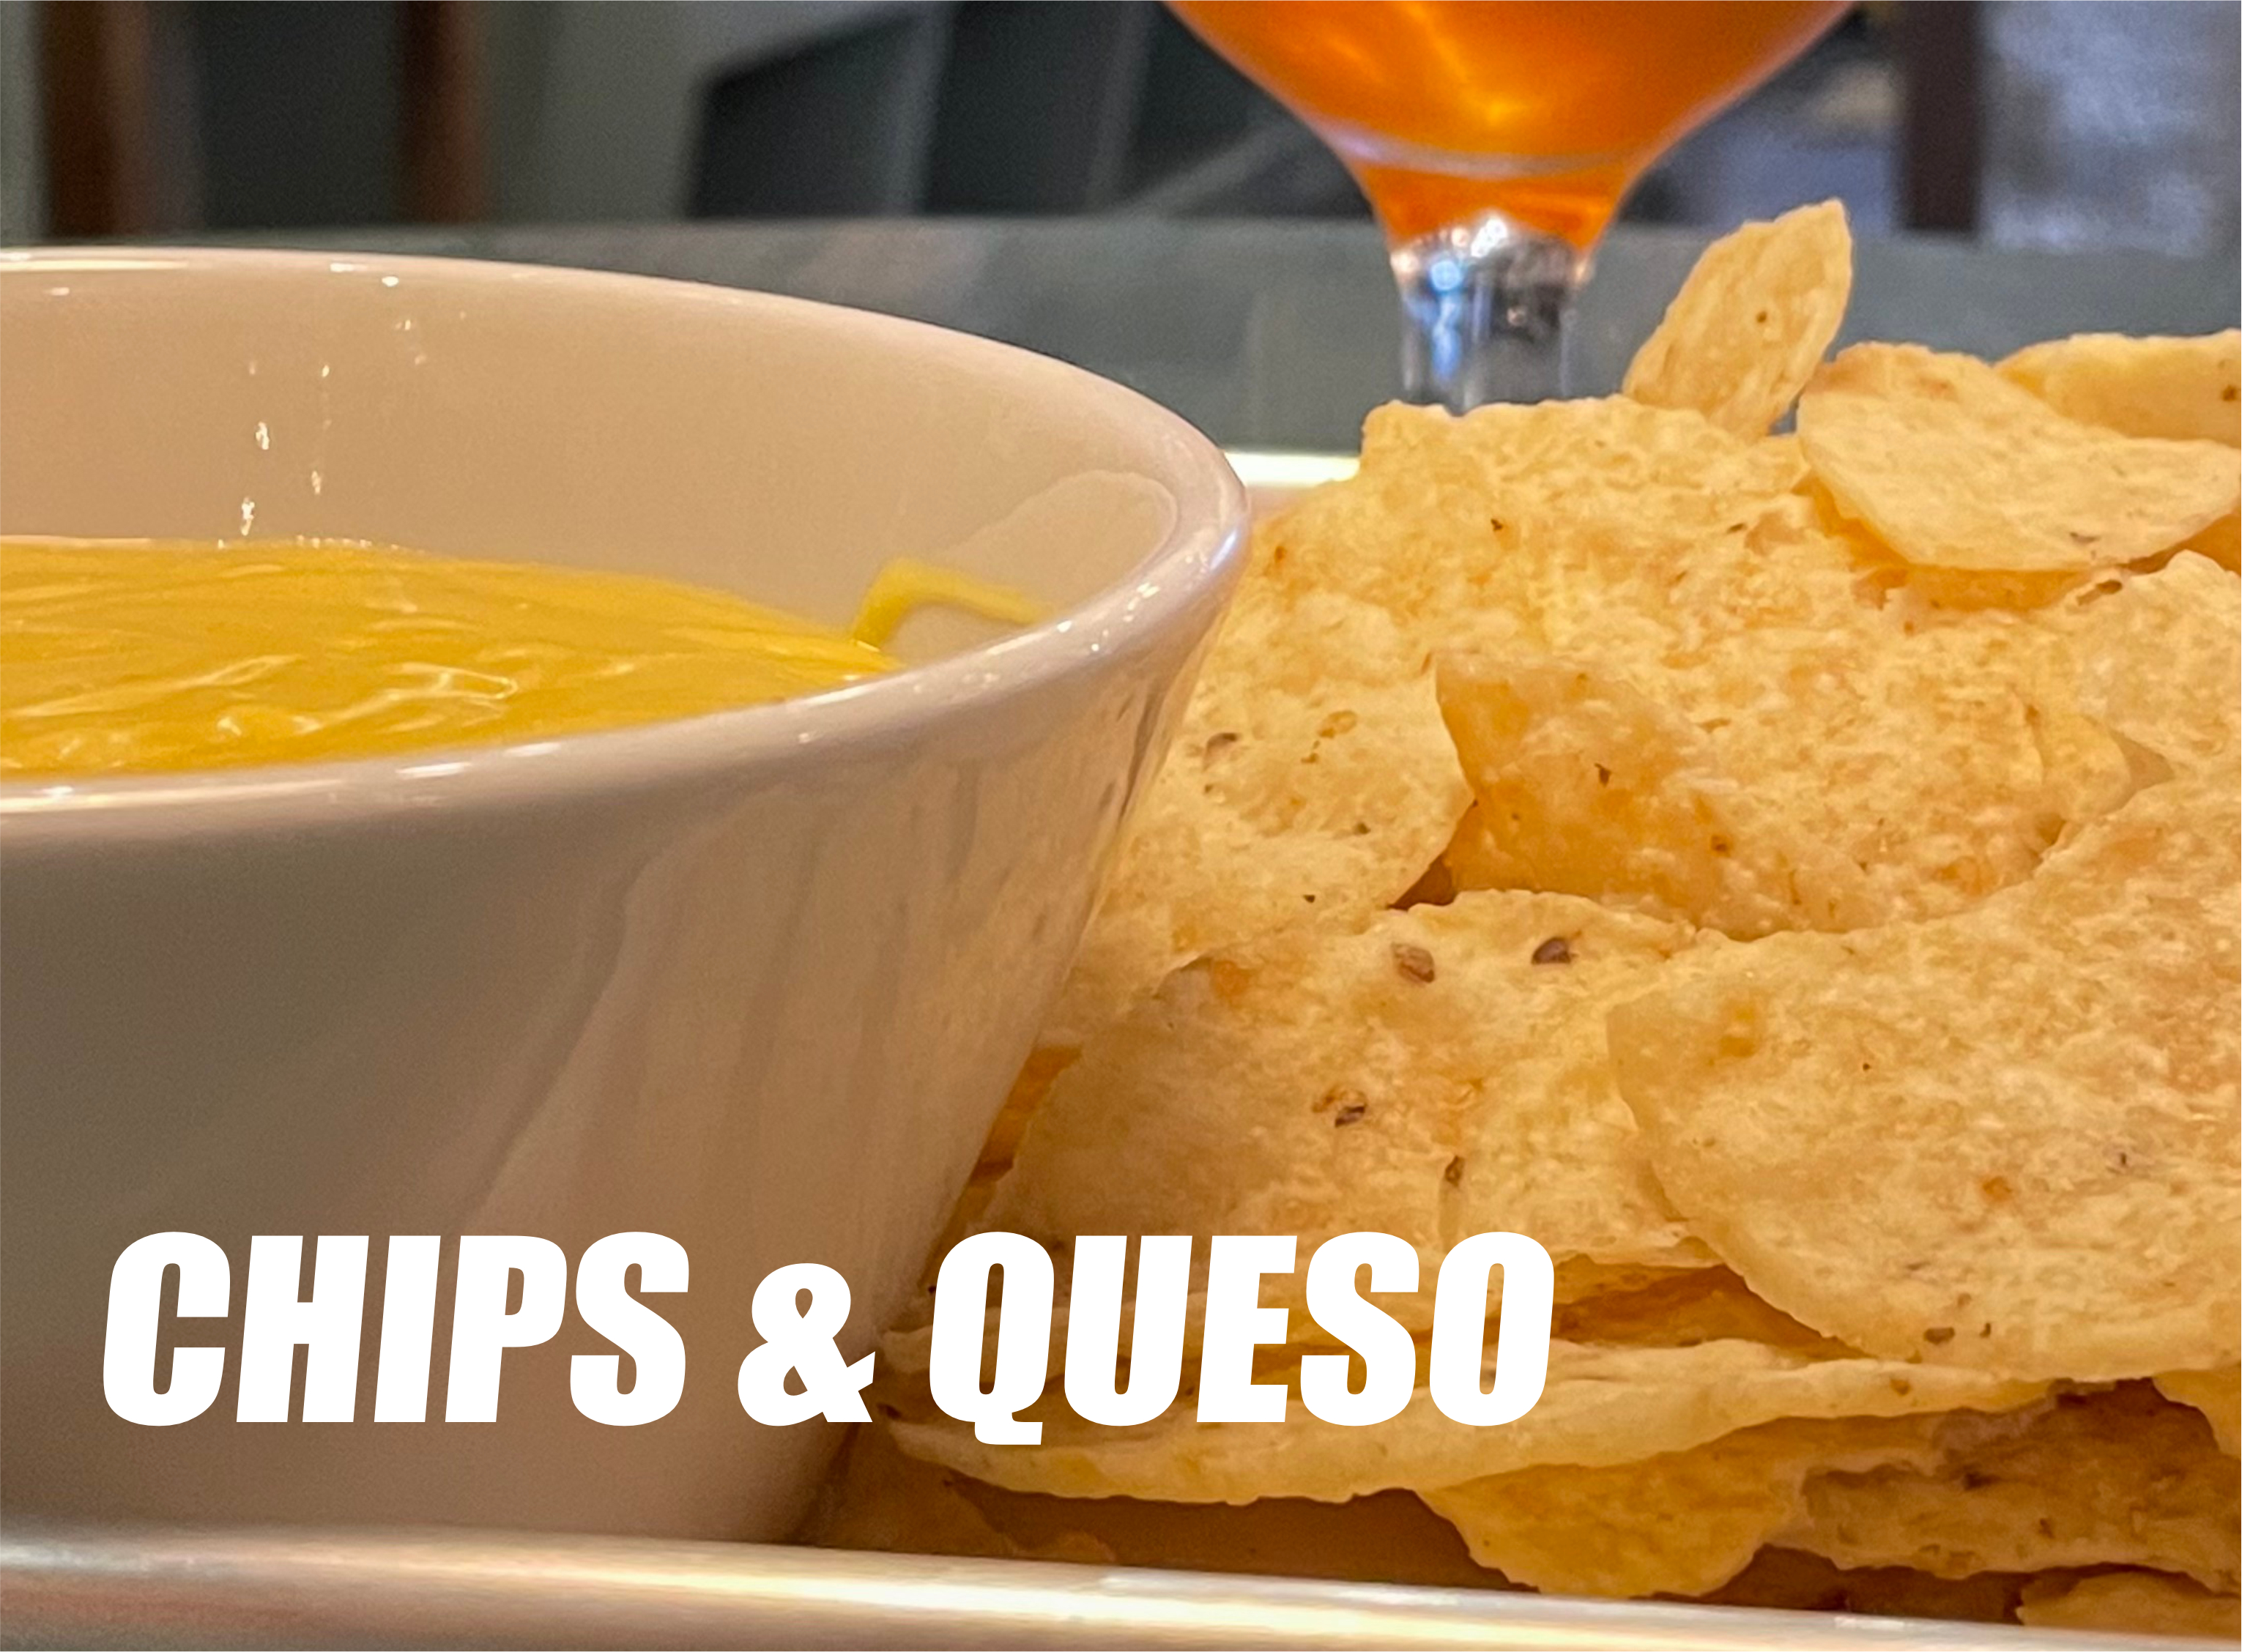 Chips & Queso, Guacamole or Spinach Artichoke Dip!